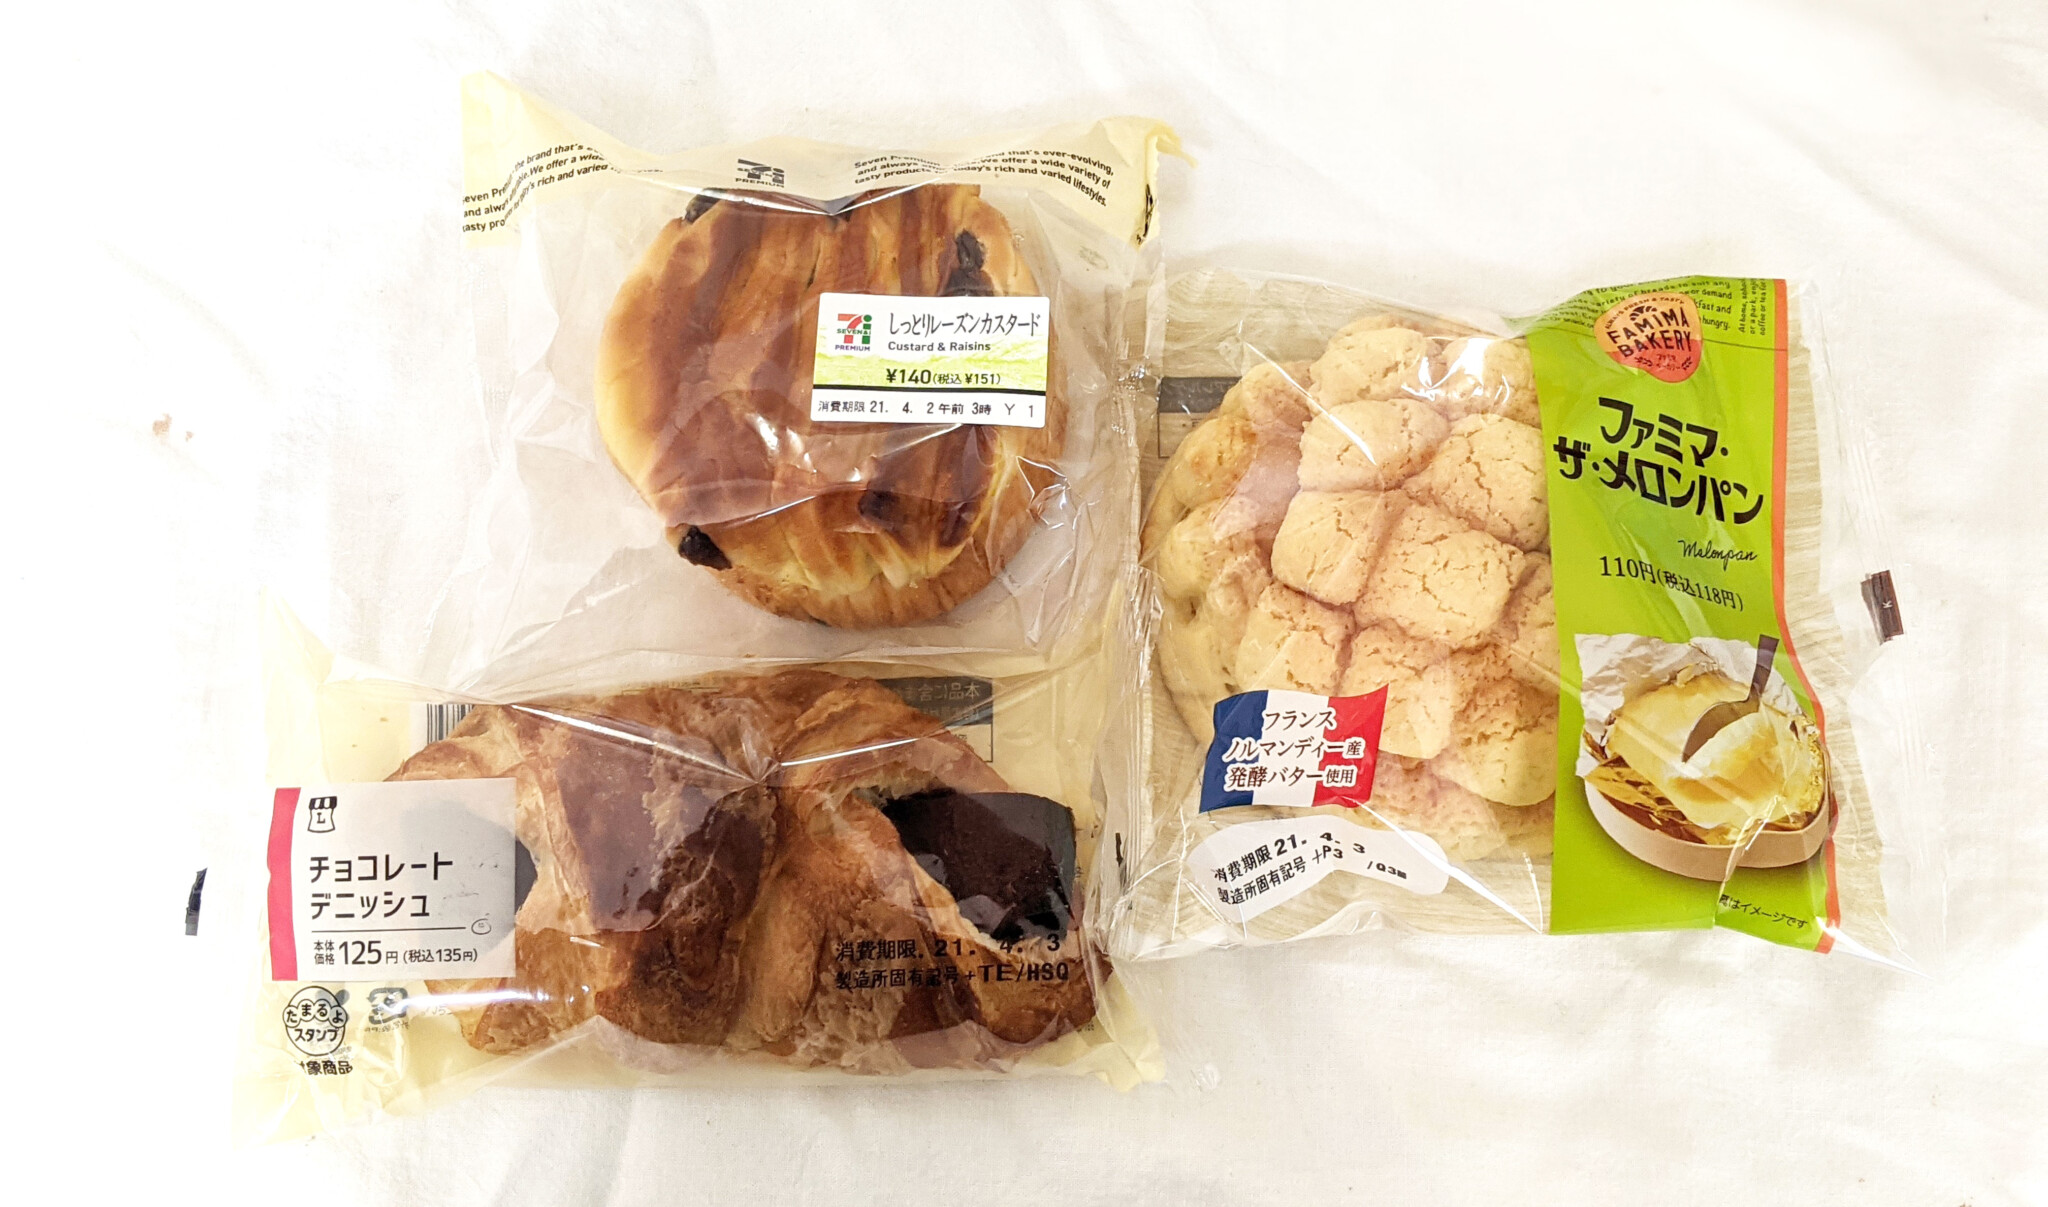 Template:リング状・結び目状のパン・焼き菓子